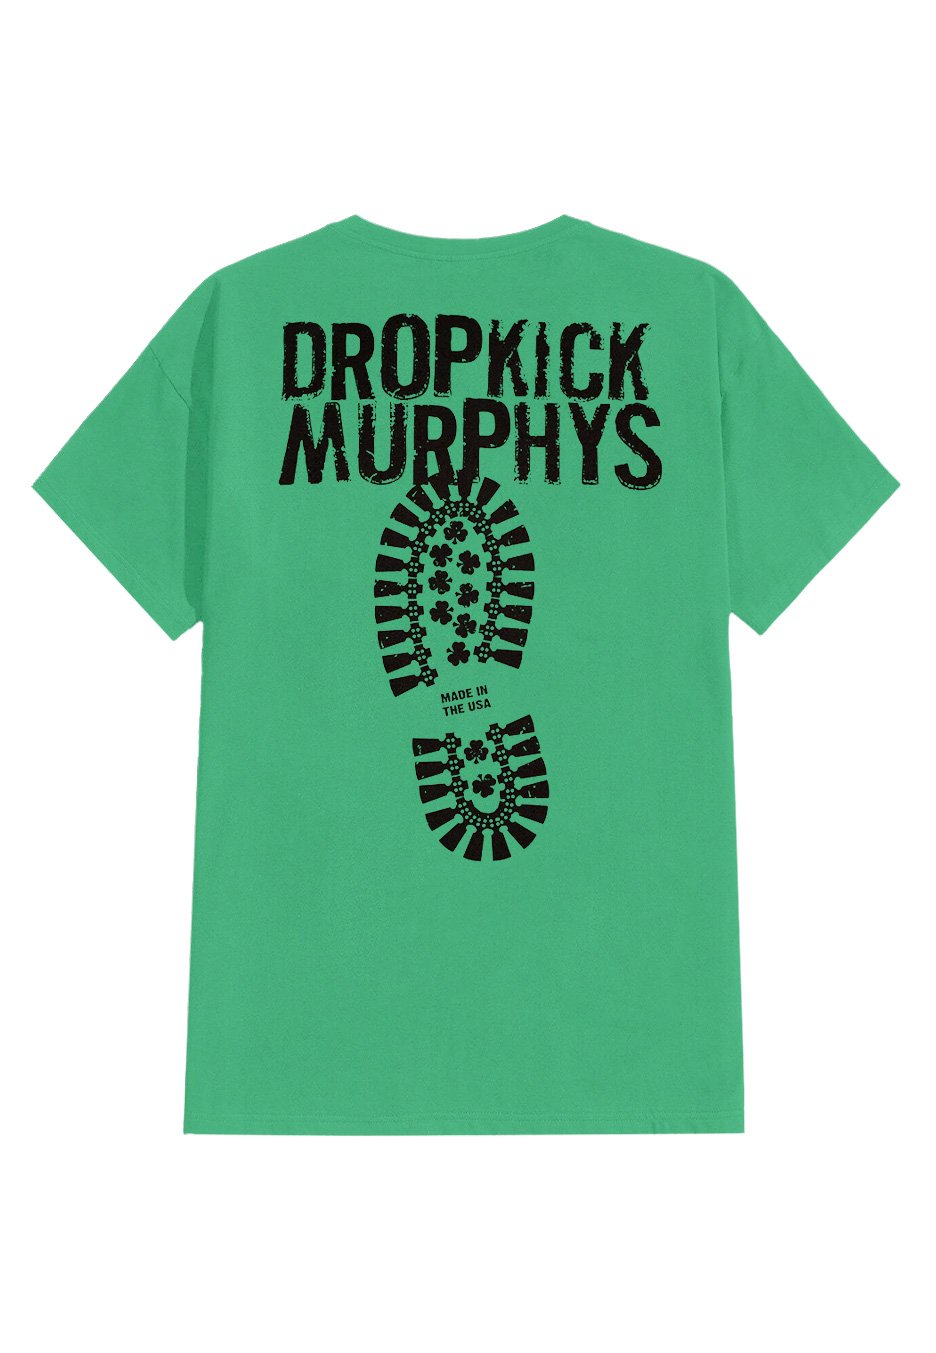 Dropkick Murphys - Boot Kelly Green - T-Shirt